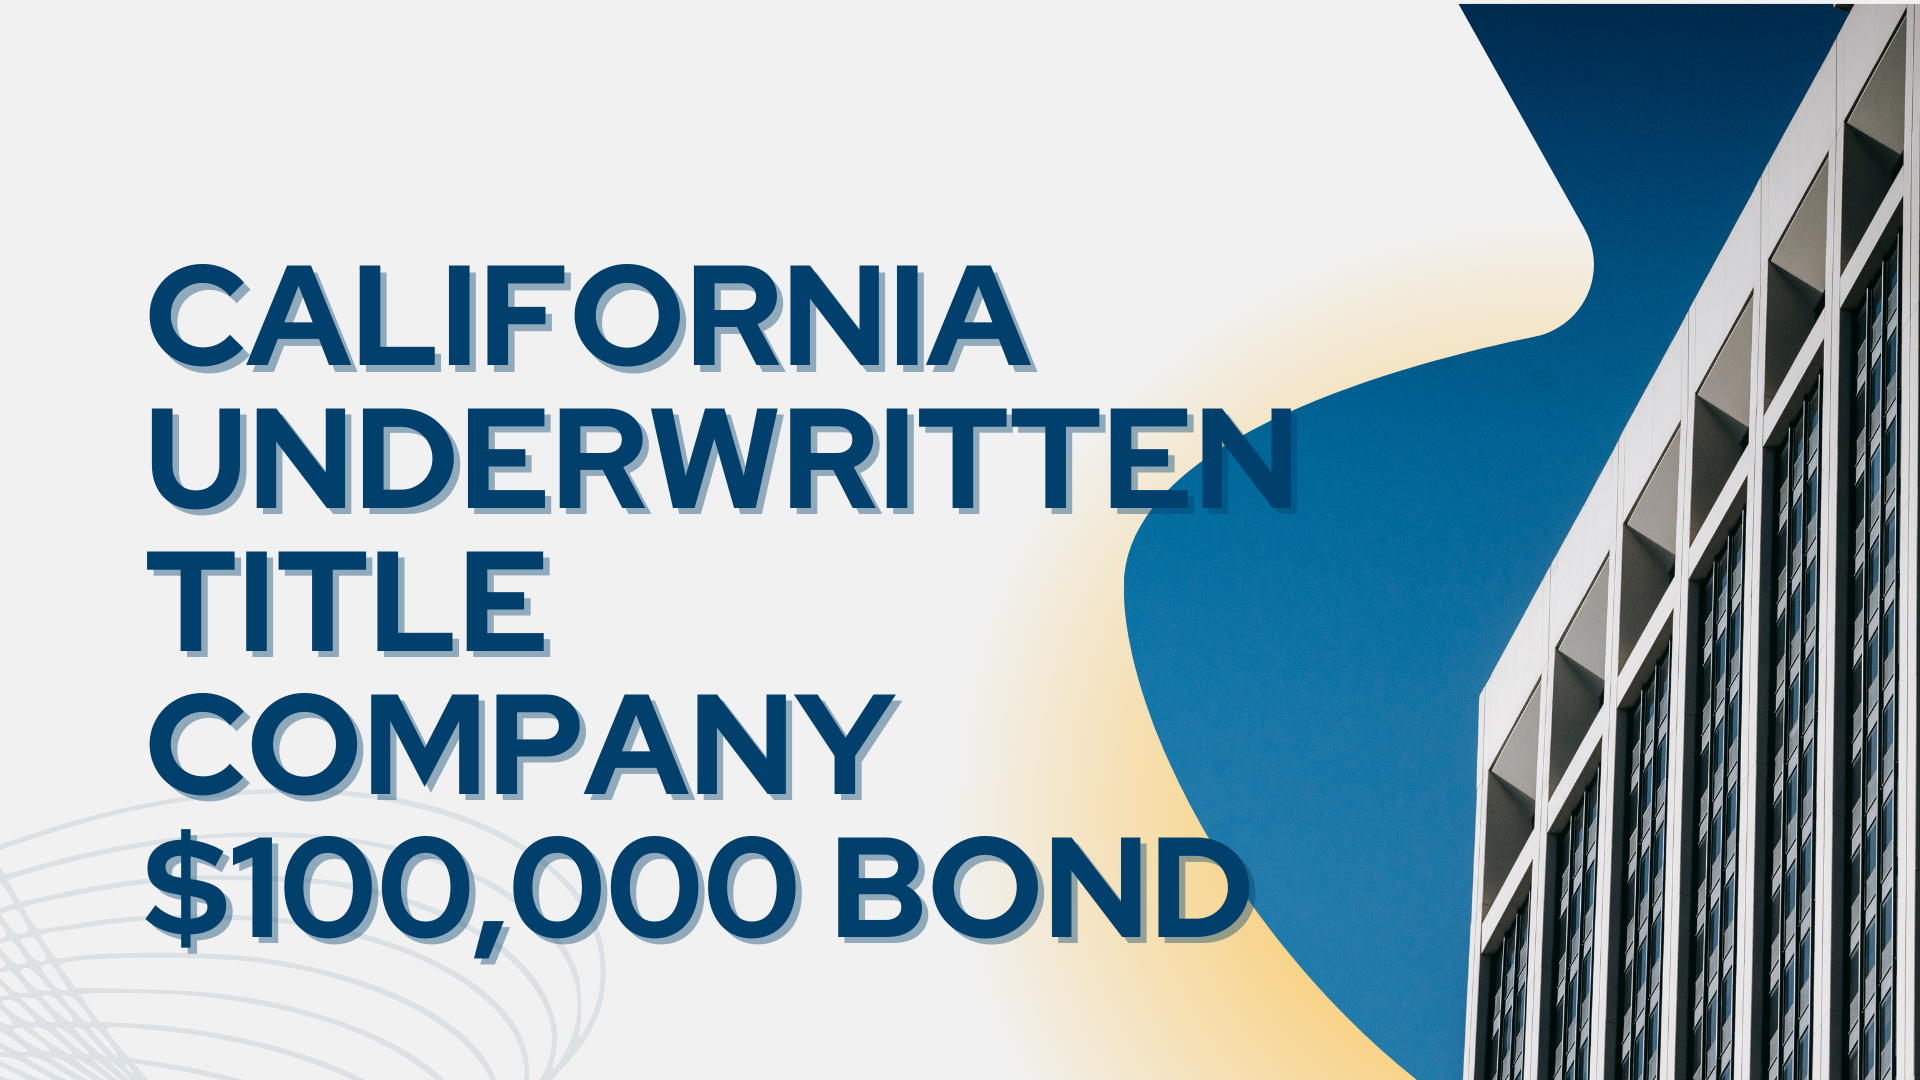 Surety Bond-California Underwritten Title Company $100,000 Bond